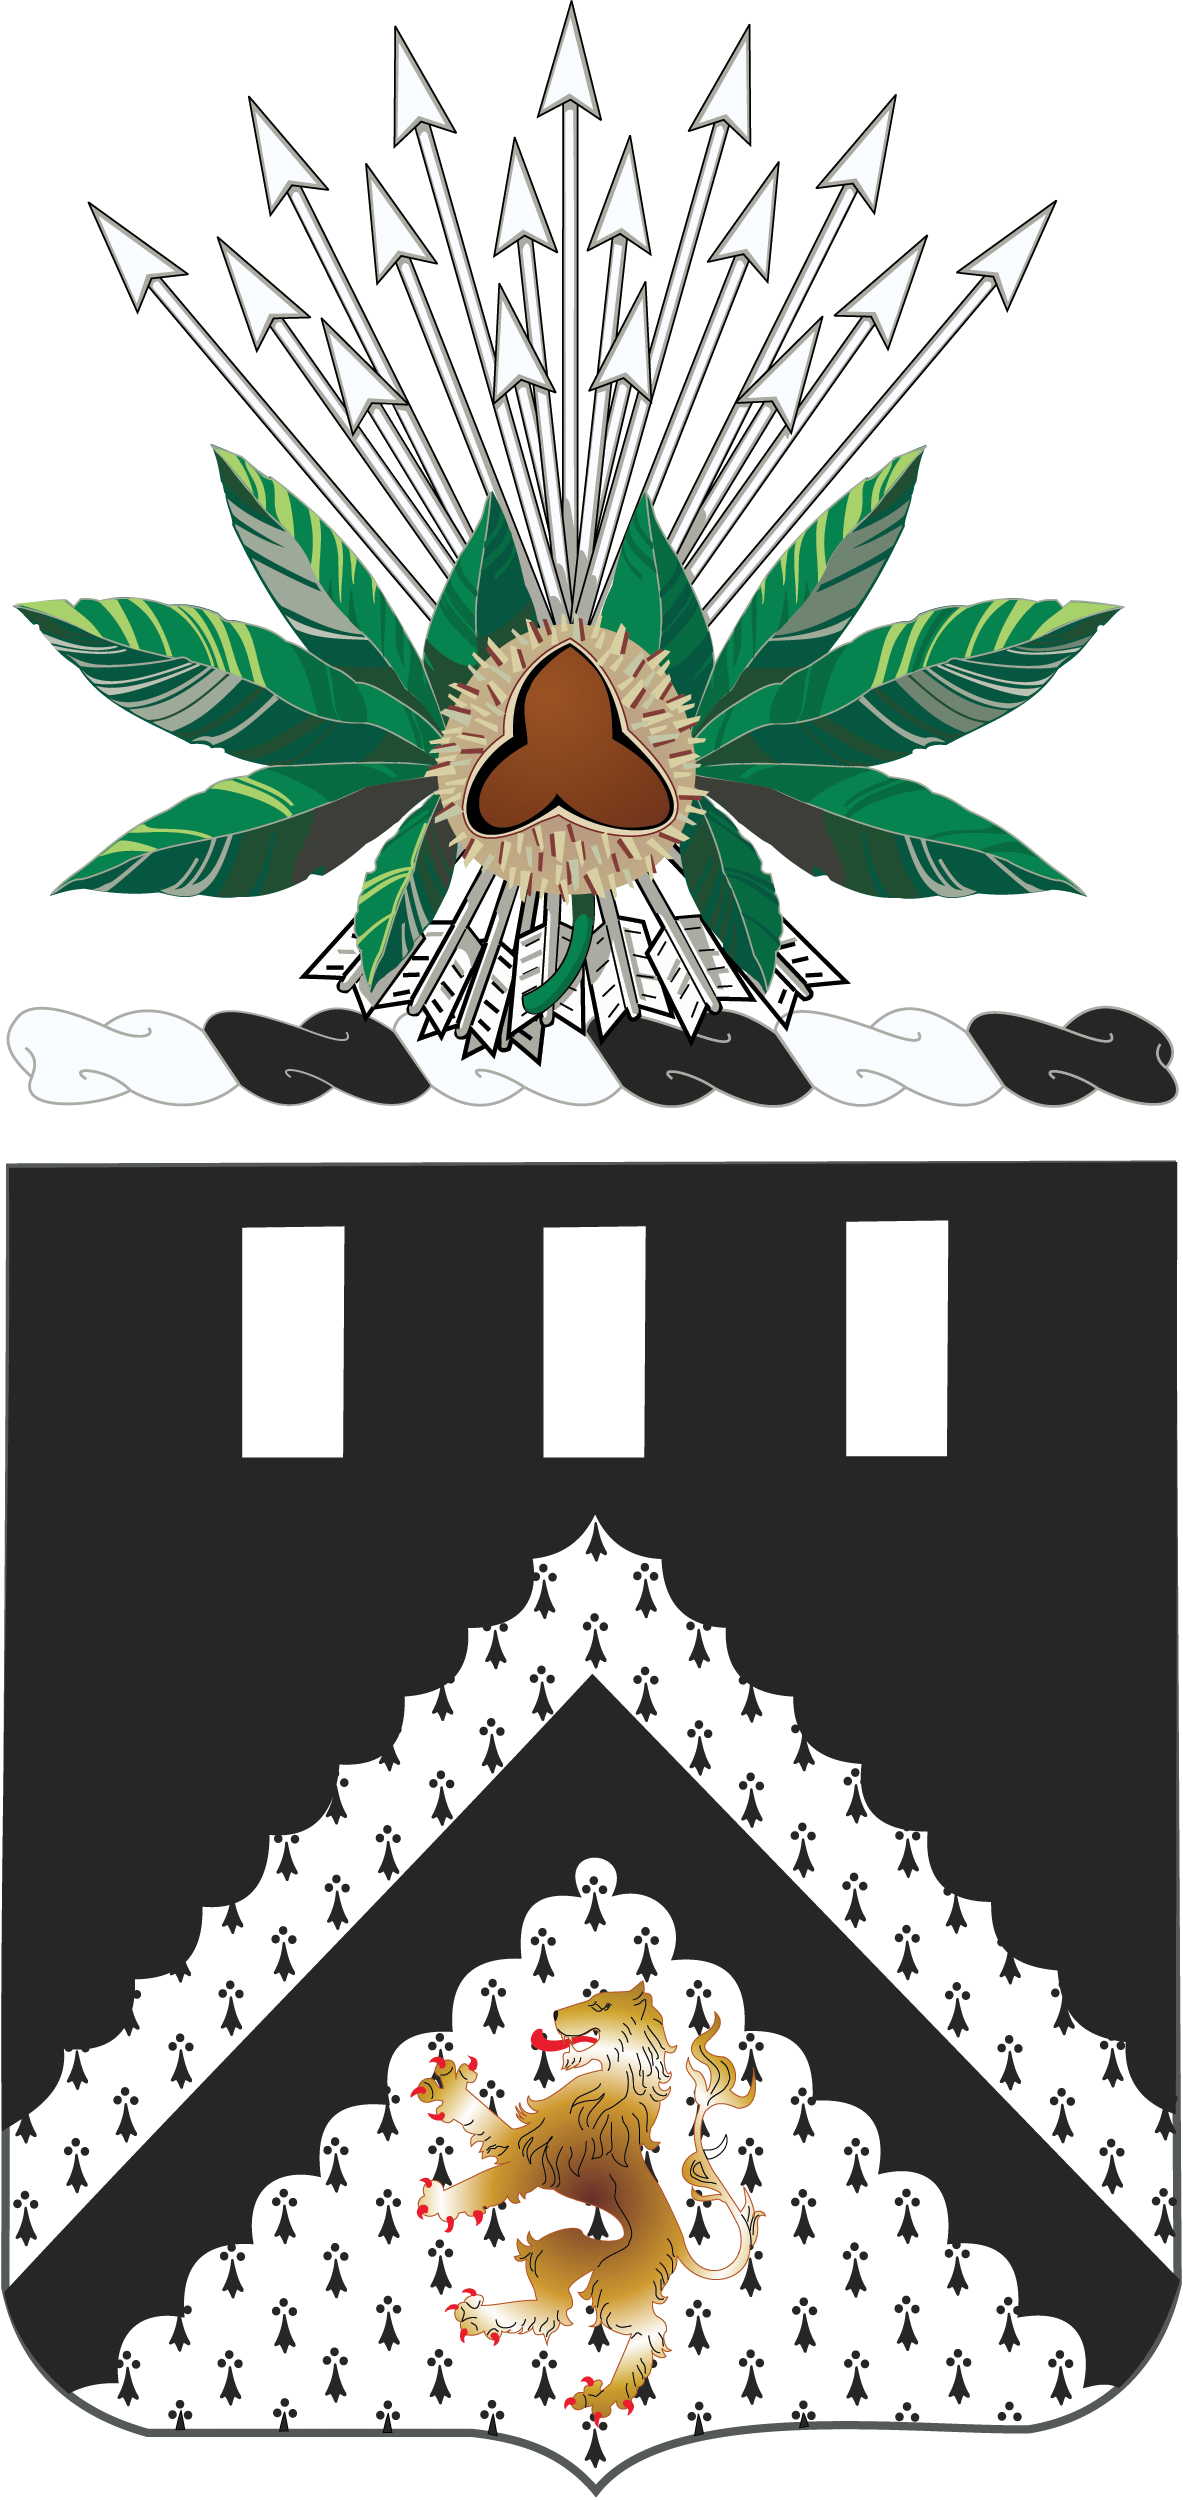 Ohio Army National Guard 112th Engineer Battalion insignia